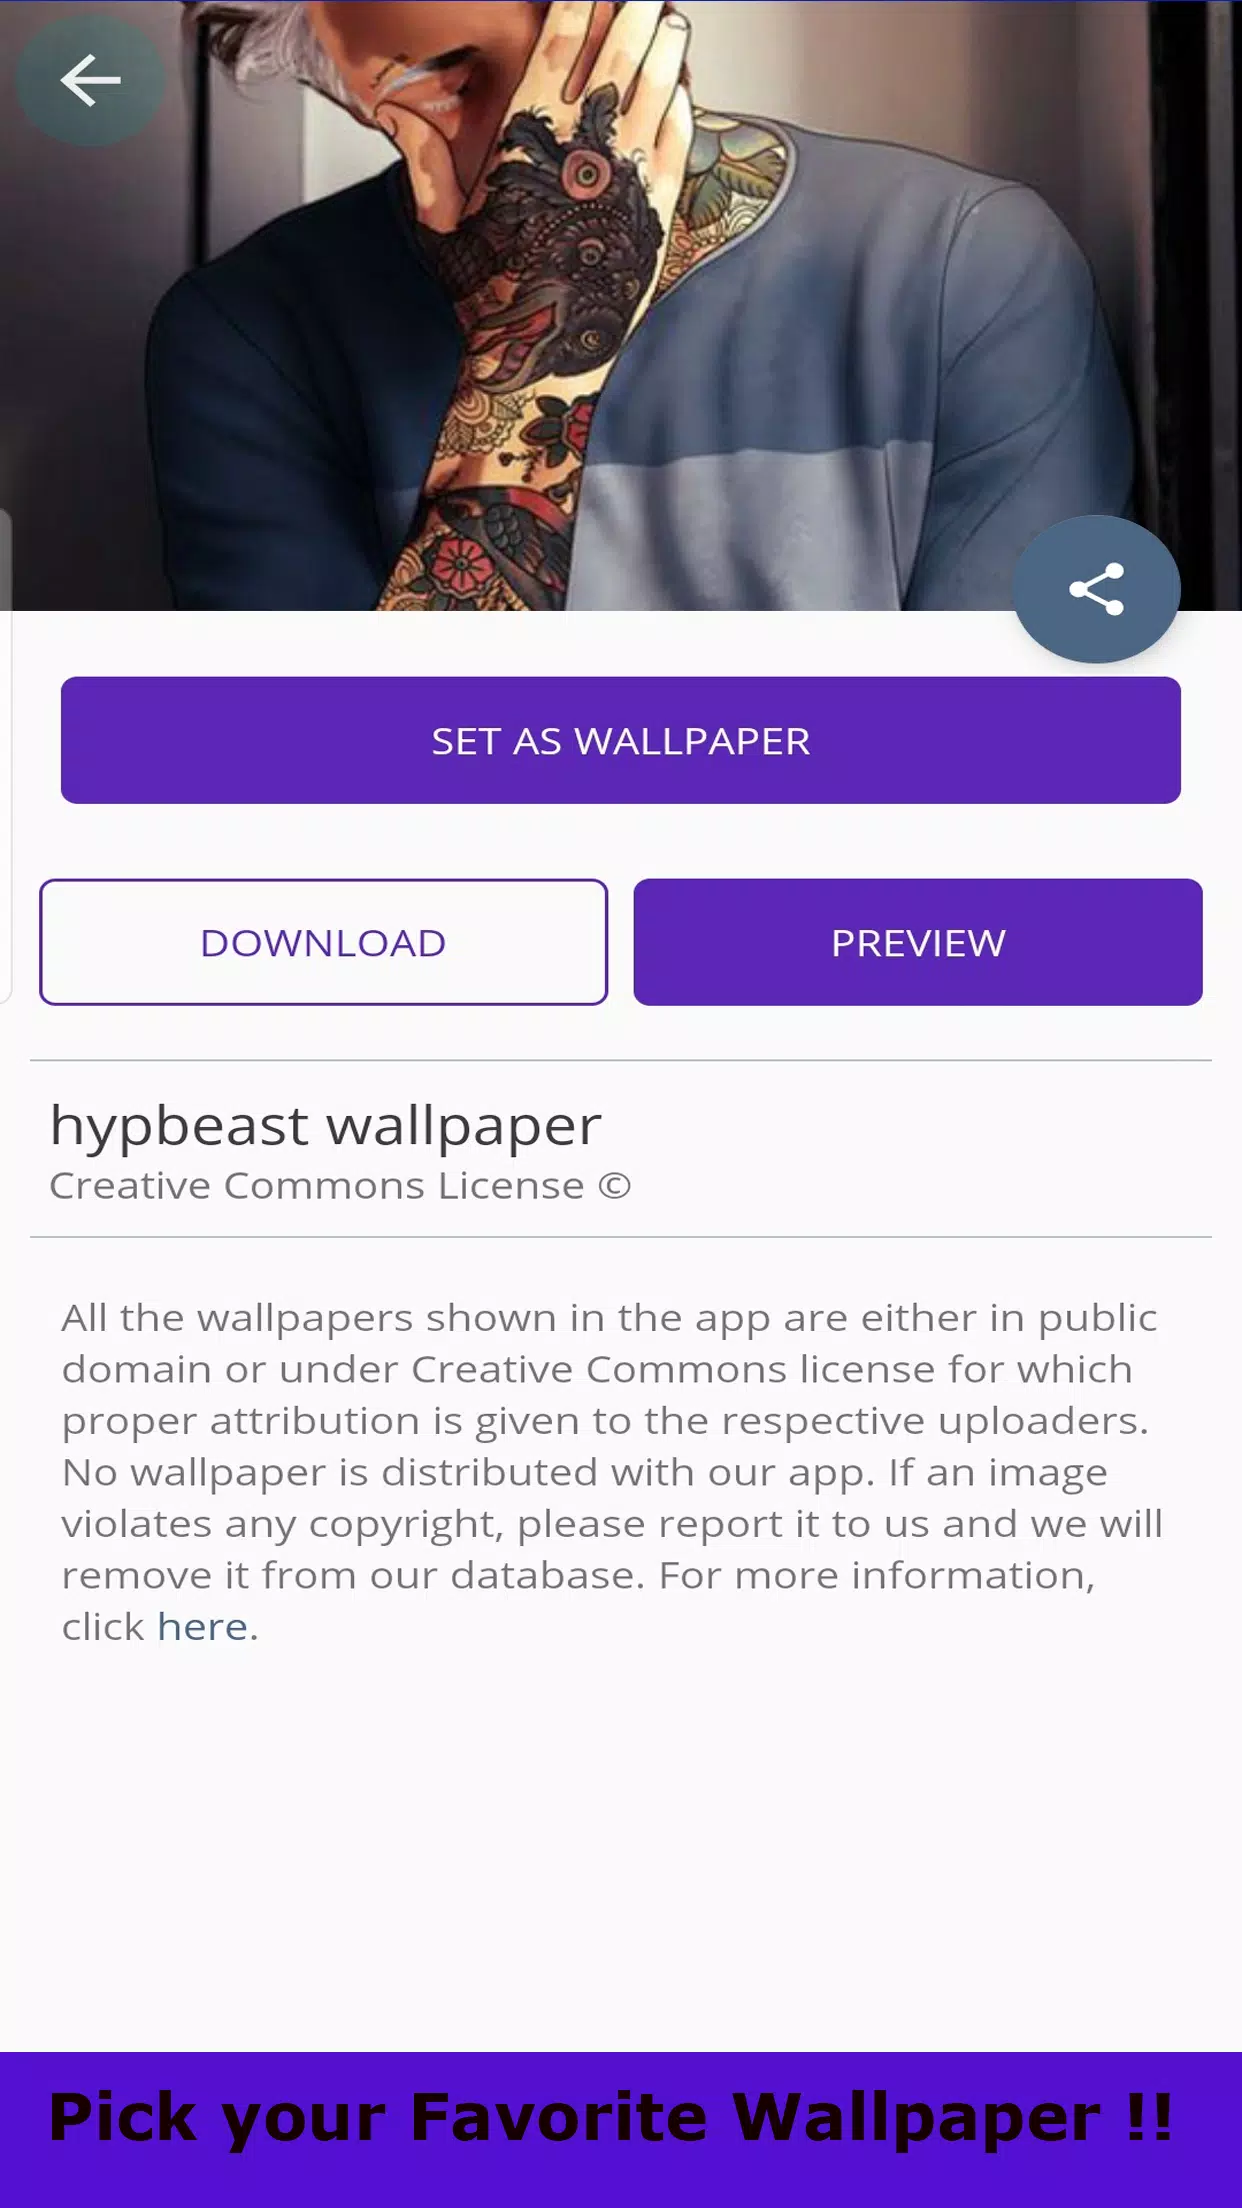 Download Hypebeast Wallpaper